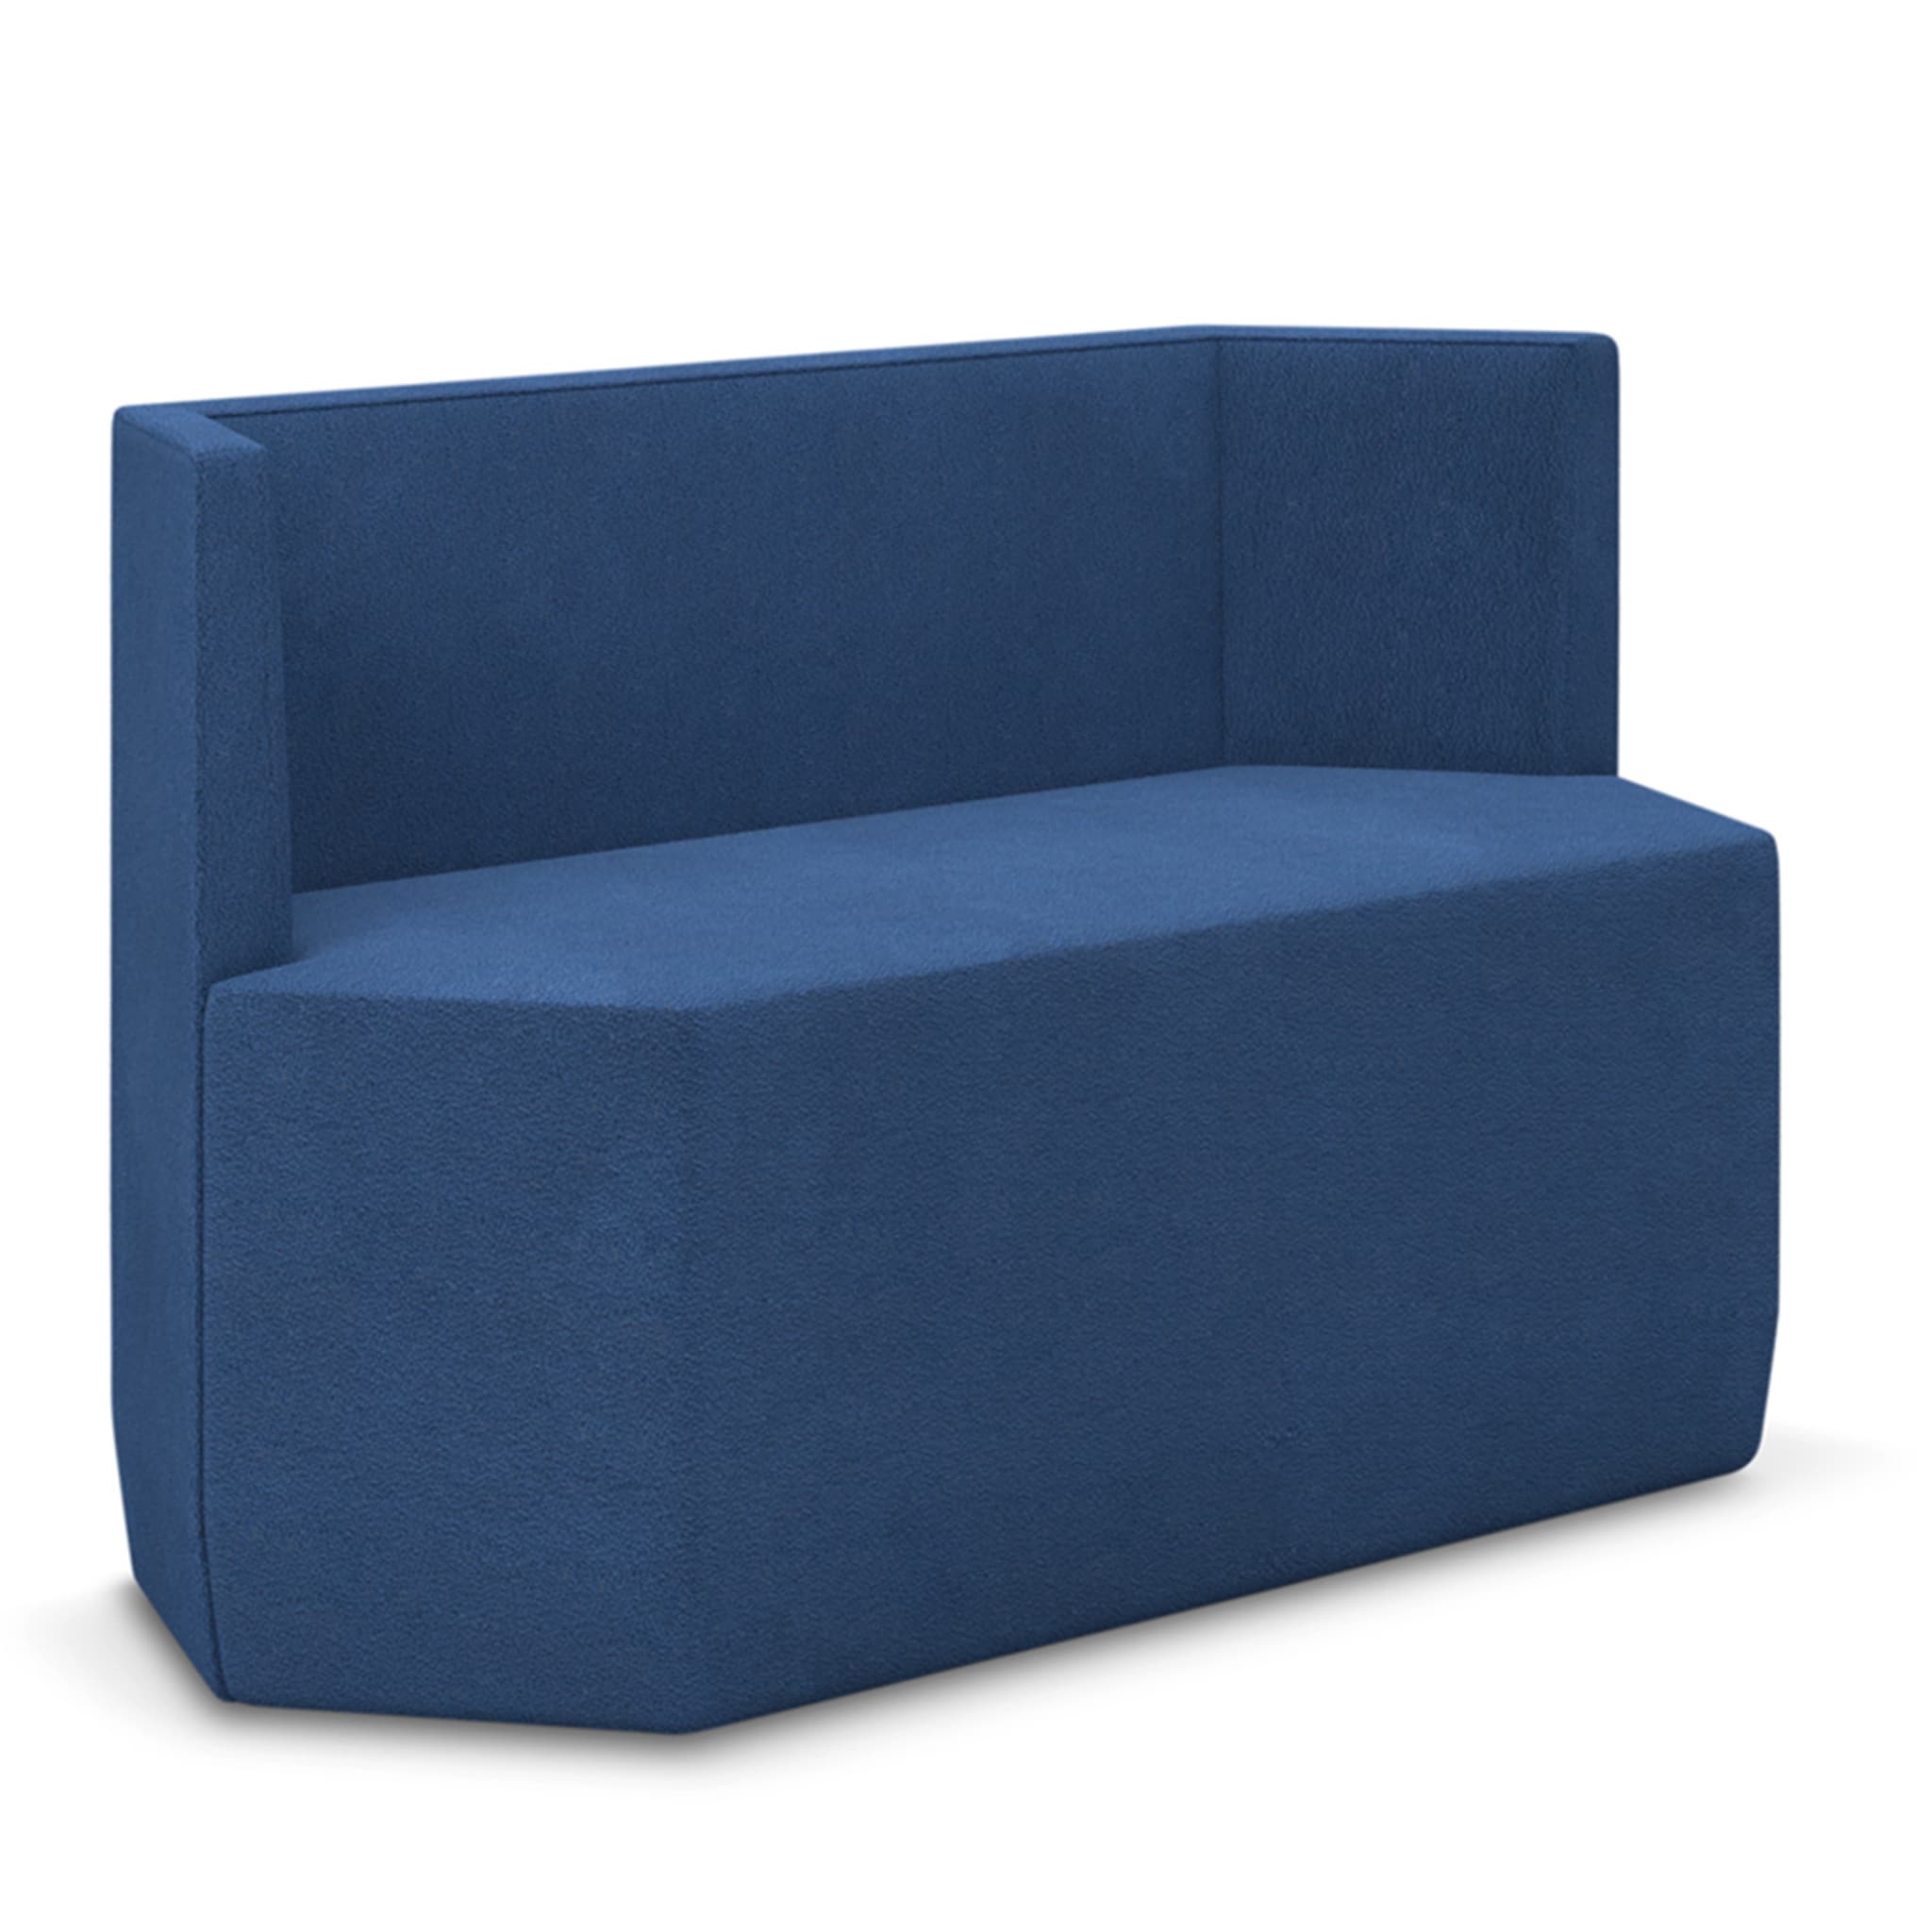 Tigram Niedriges blaues sofa by Italo Pertichini - Alternative Ansicht 1